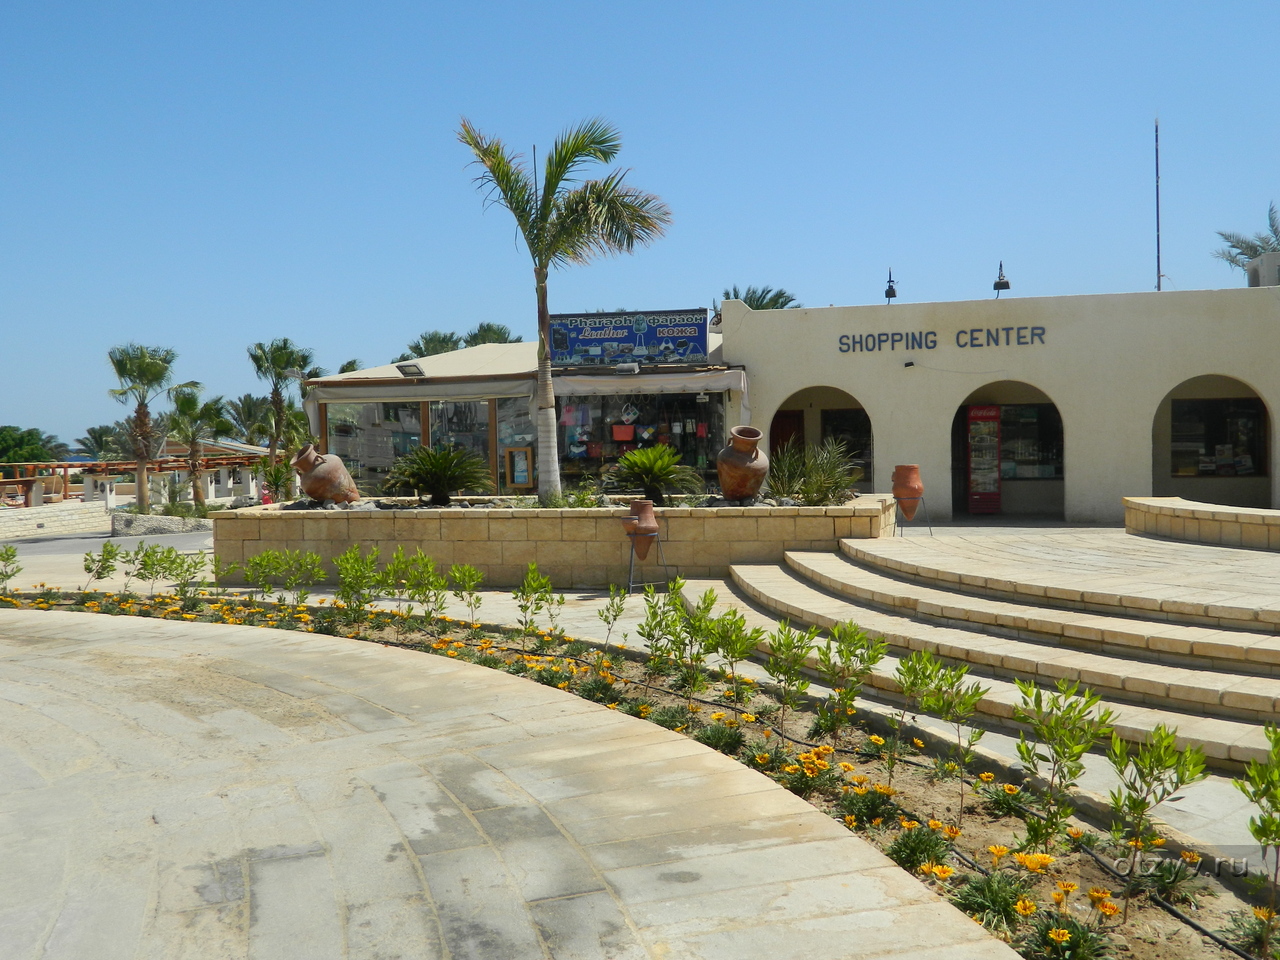 Coral beach rotana resort. Coral Beach Hotel Hurghada Египет Хургада. Отель Корал Бич ротана Резорт Египет Хургада. Coral Beach Rotana Resort 4 Египет Хургада. Ротана Хургада отель Корал Бич.